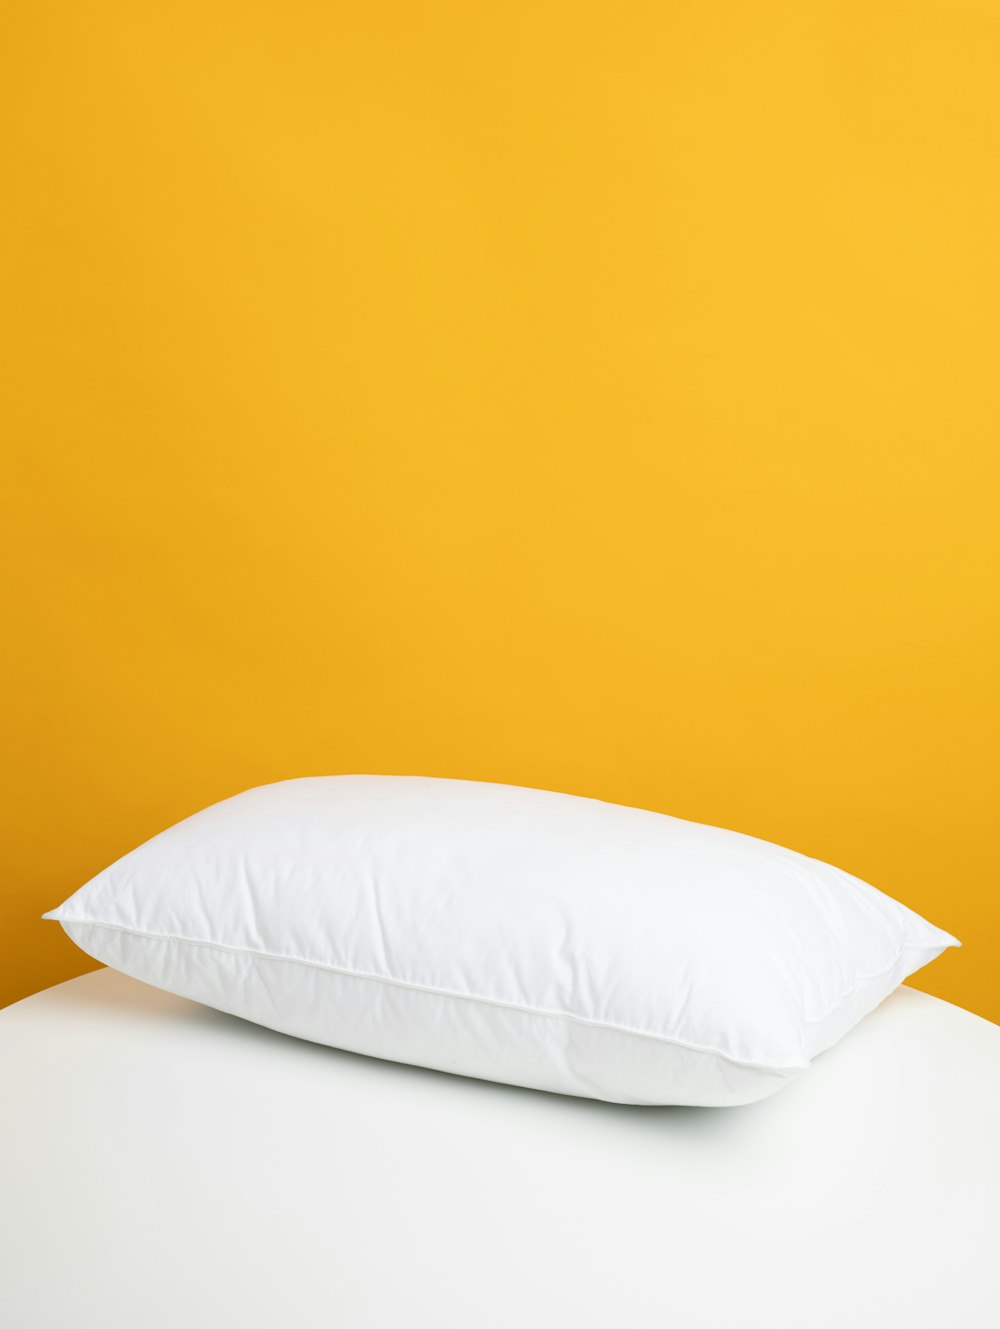 travesseiro branco na cama branca